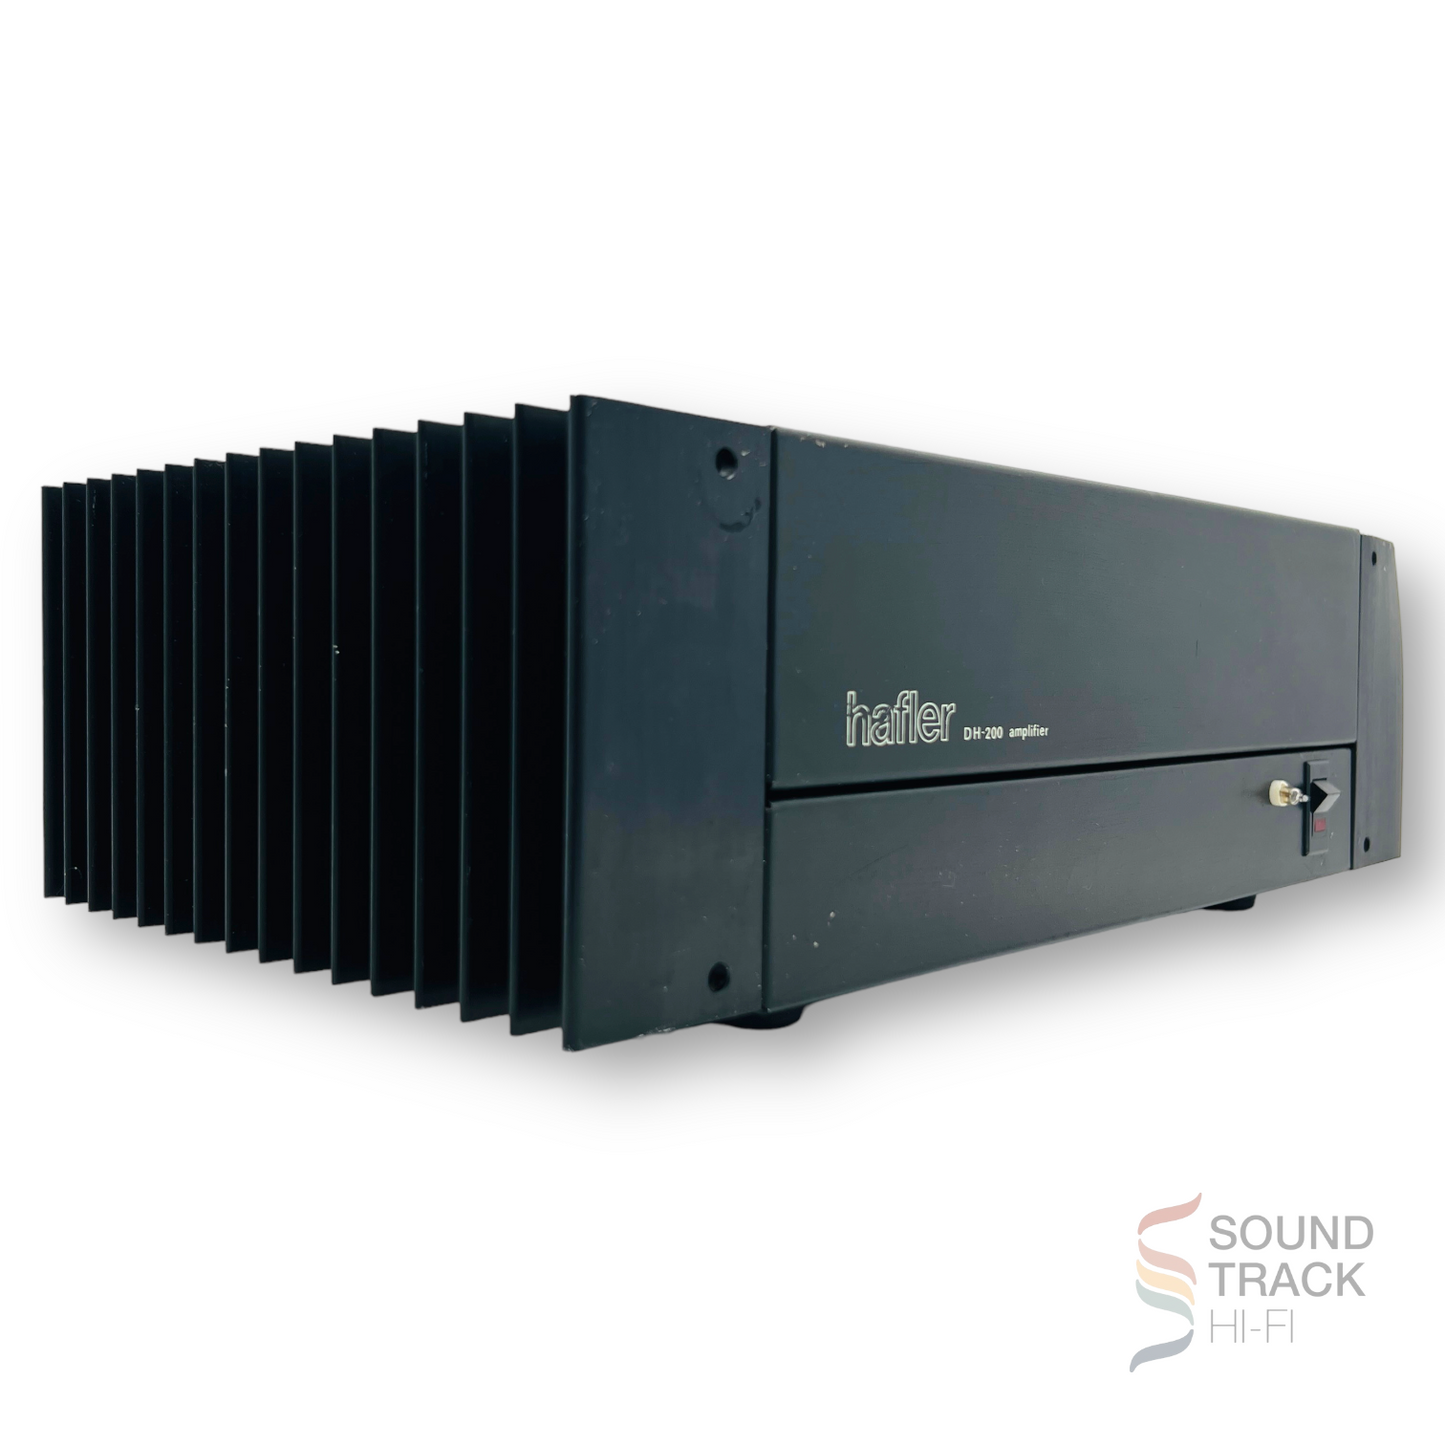 Hafler DH-200 100 Watt Stereo Power Amplifier